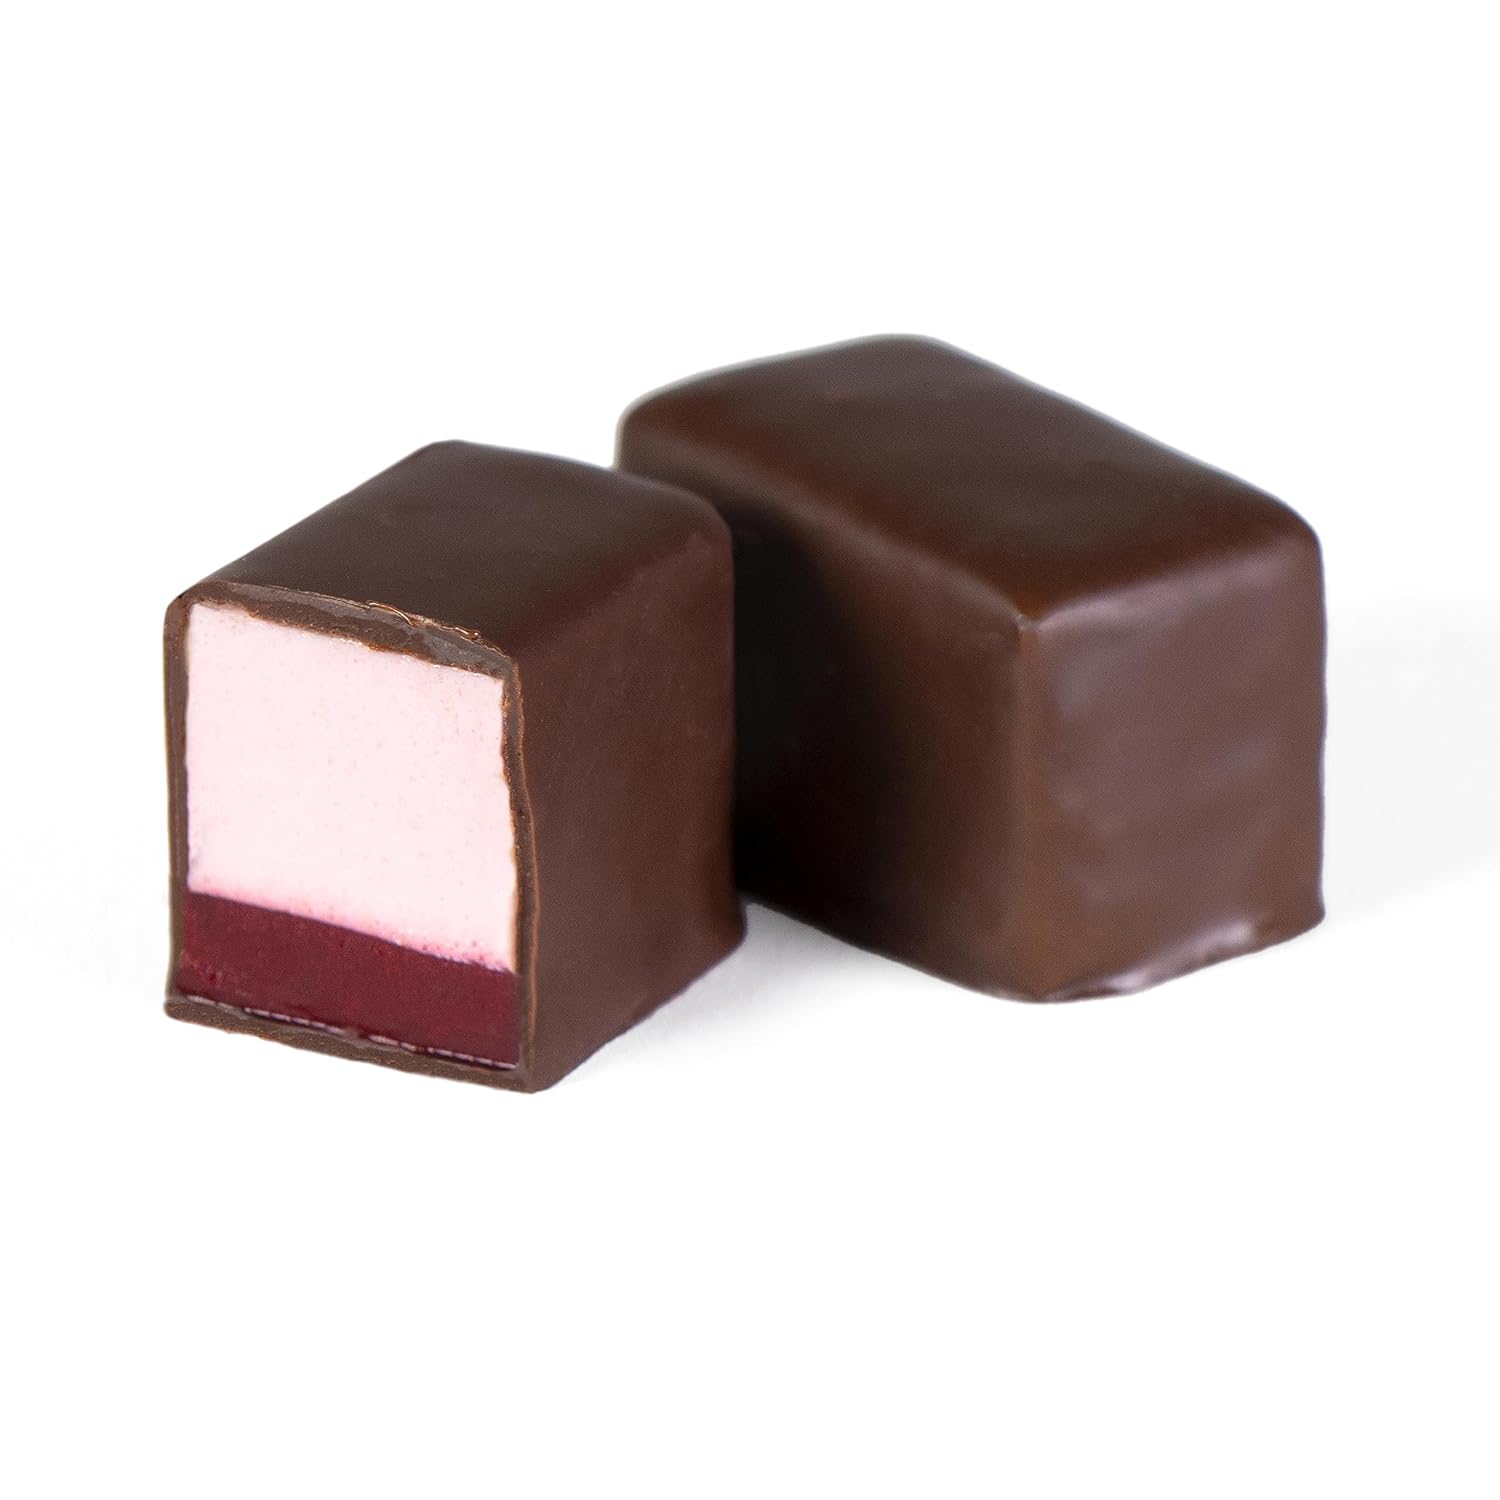 Chocolate Marshmallow Candy Strawberry Flavor - Kosher Dairy Free, Egg Free, One Pound